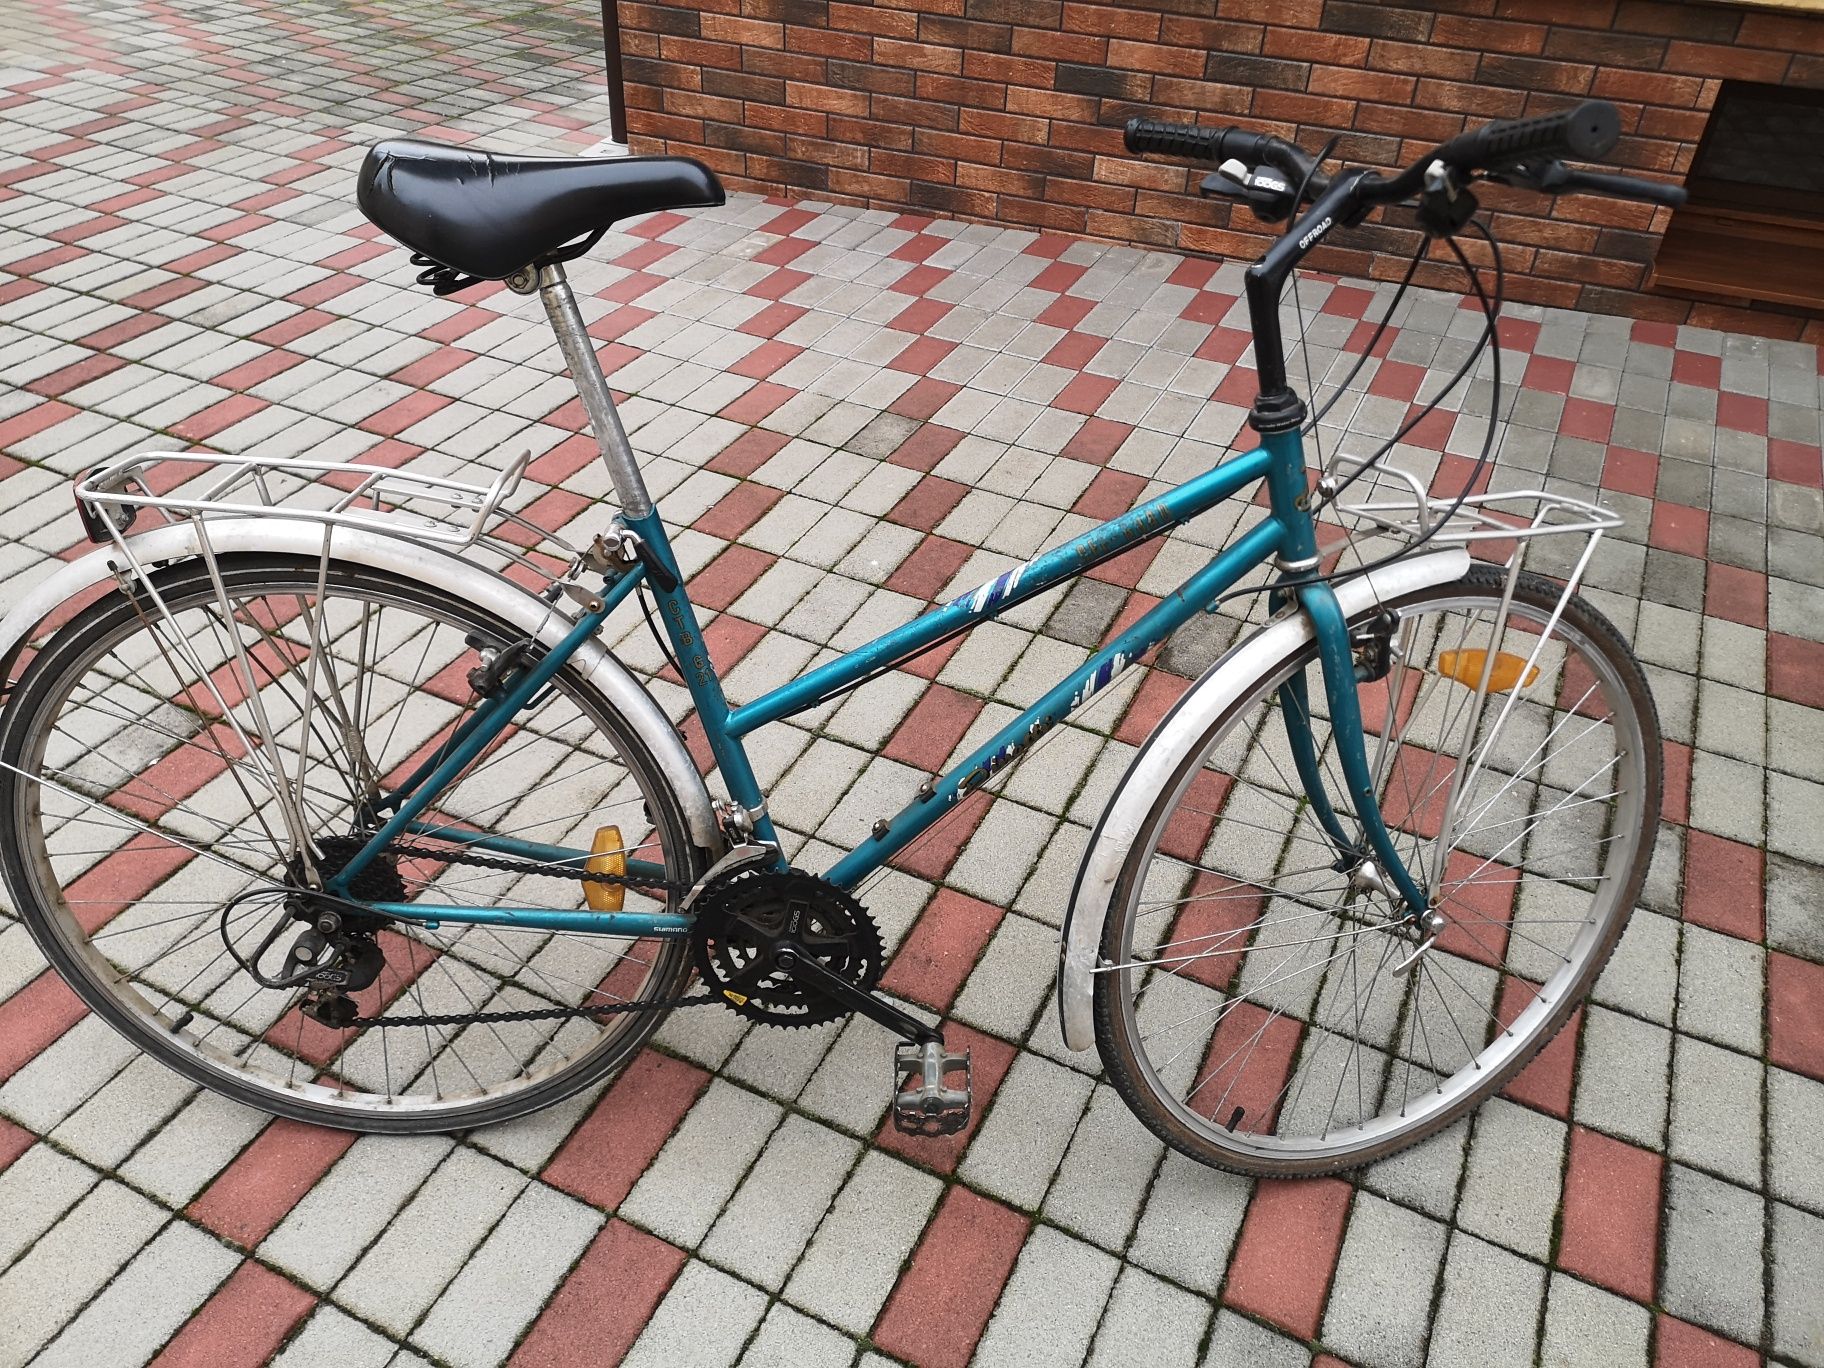 Bicicleta full shimano